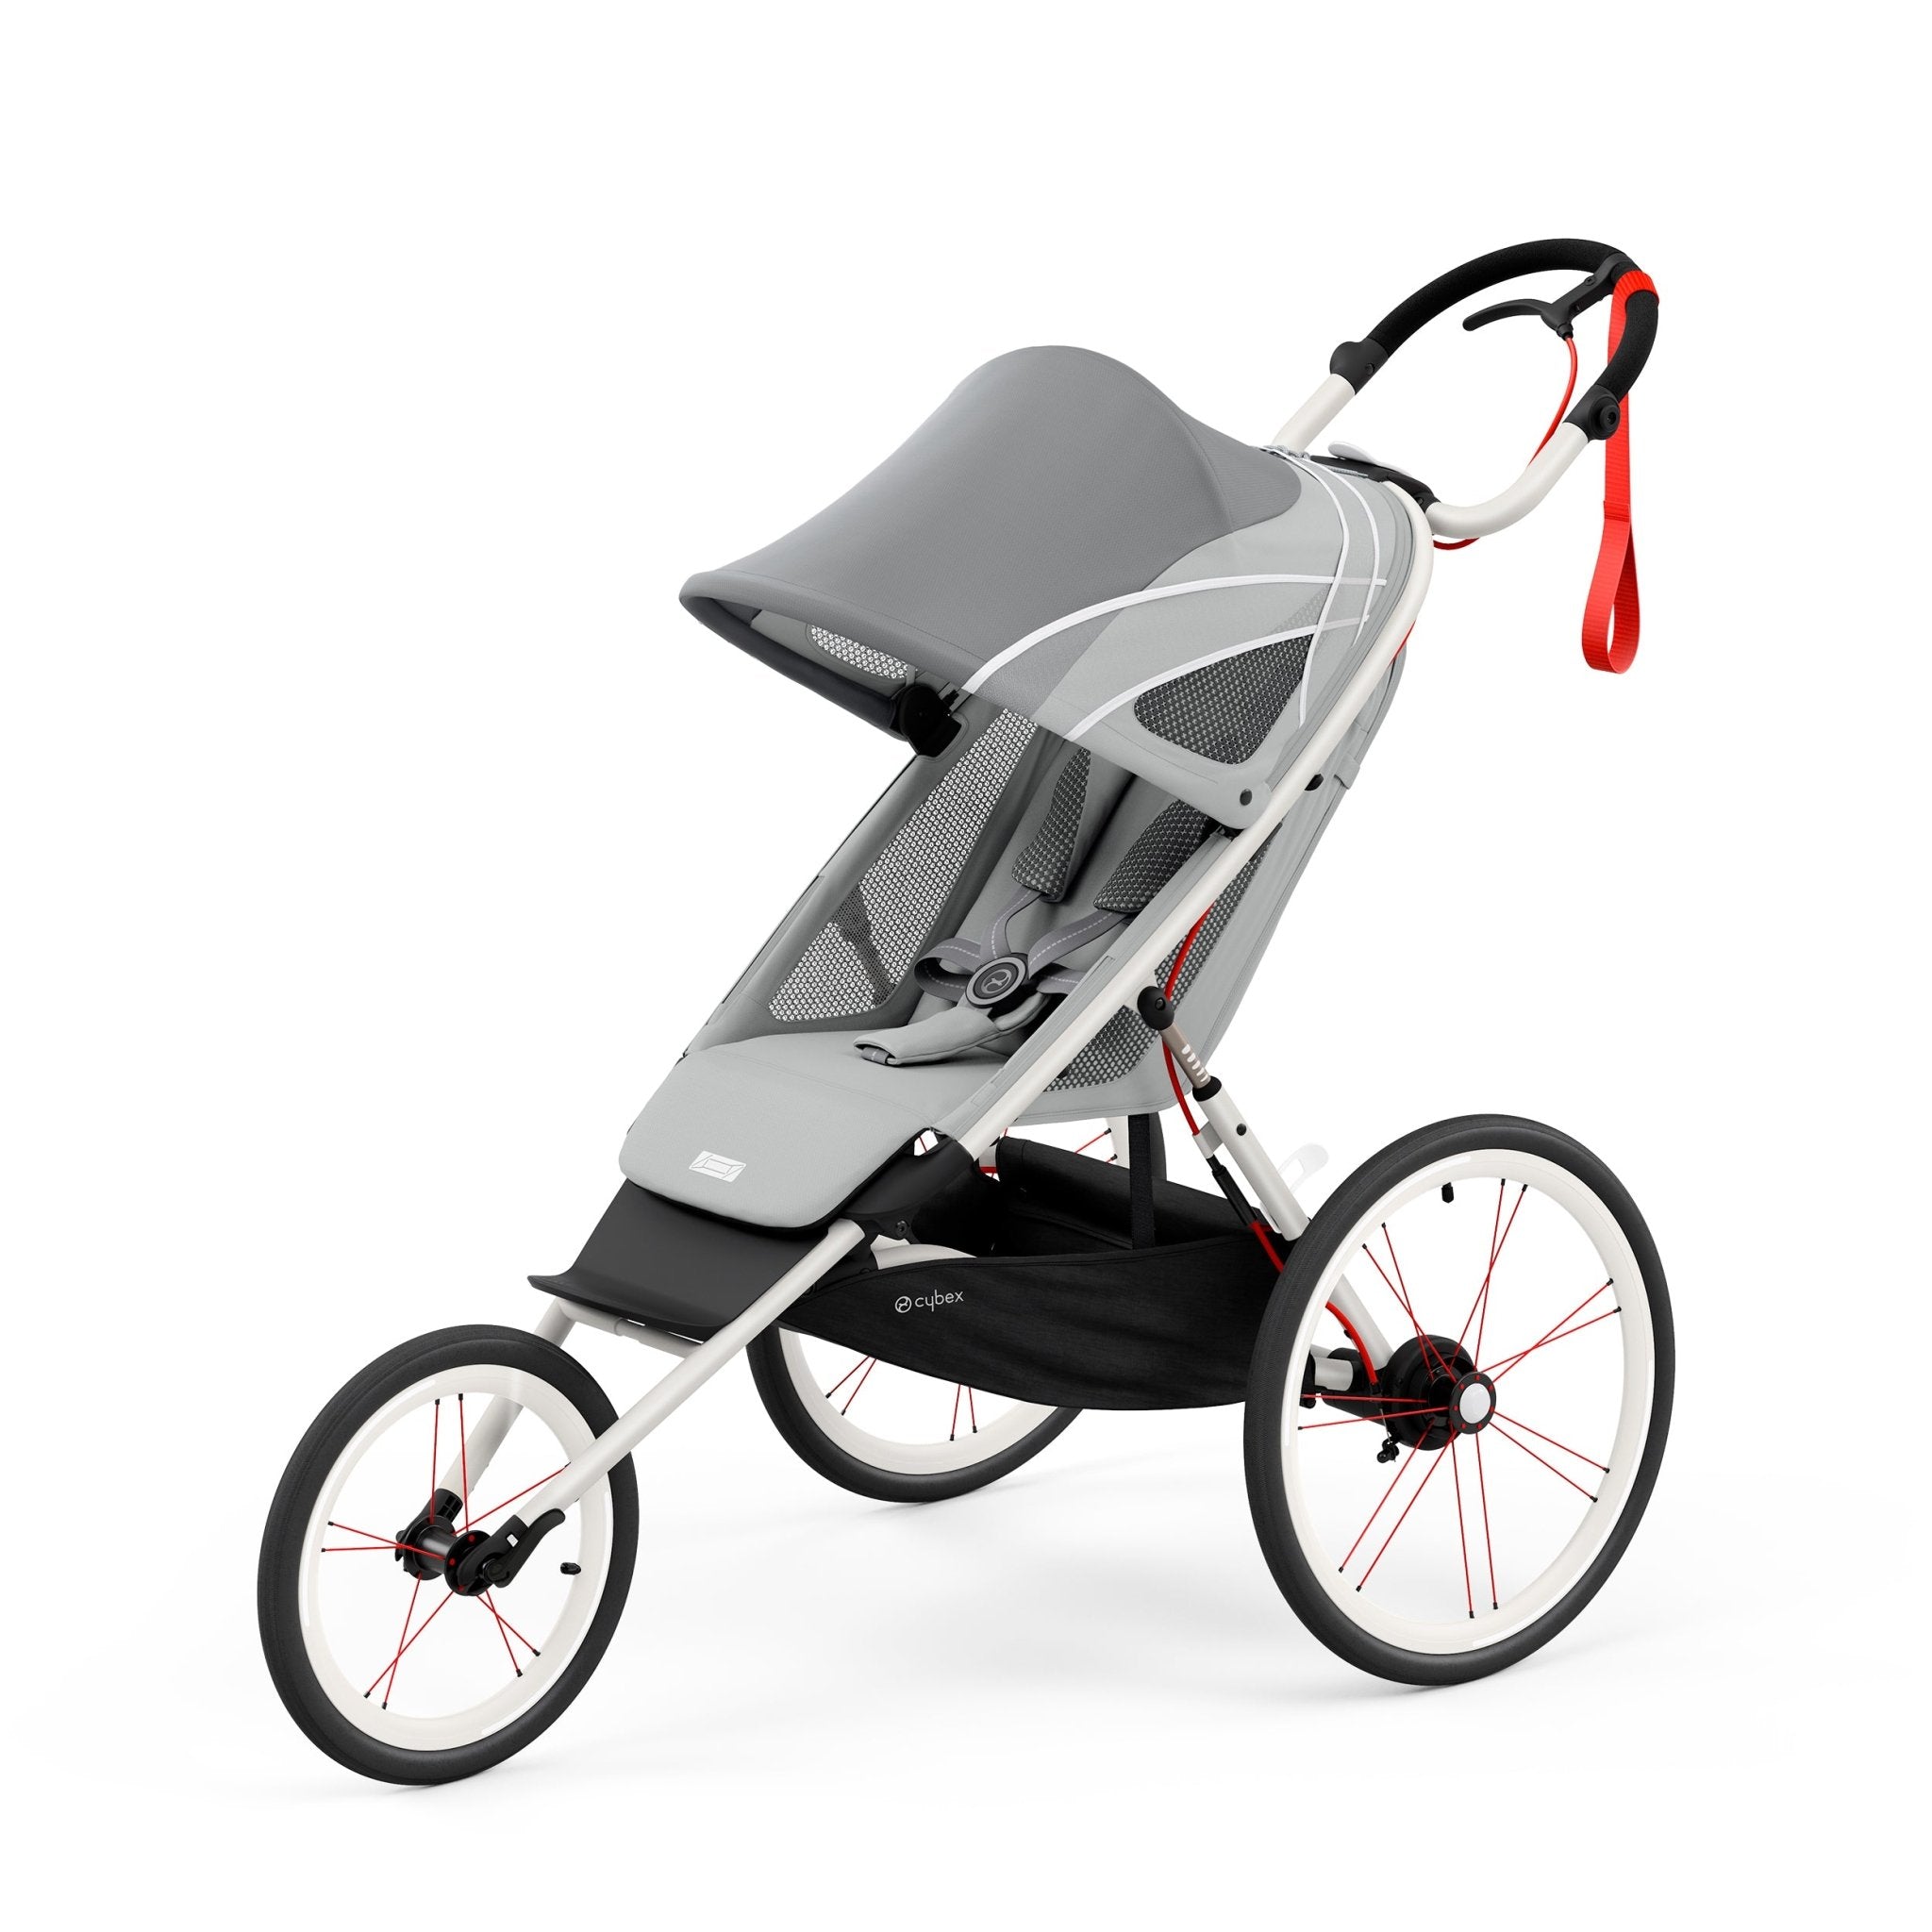 Cybex AVI Jogging Stroller Bundle, Black Frame + Seat Pack, -- ANB Baby